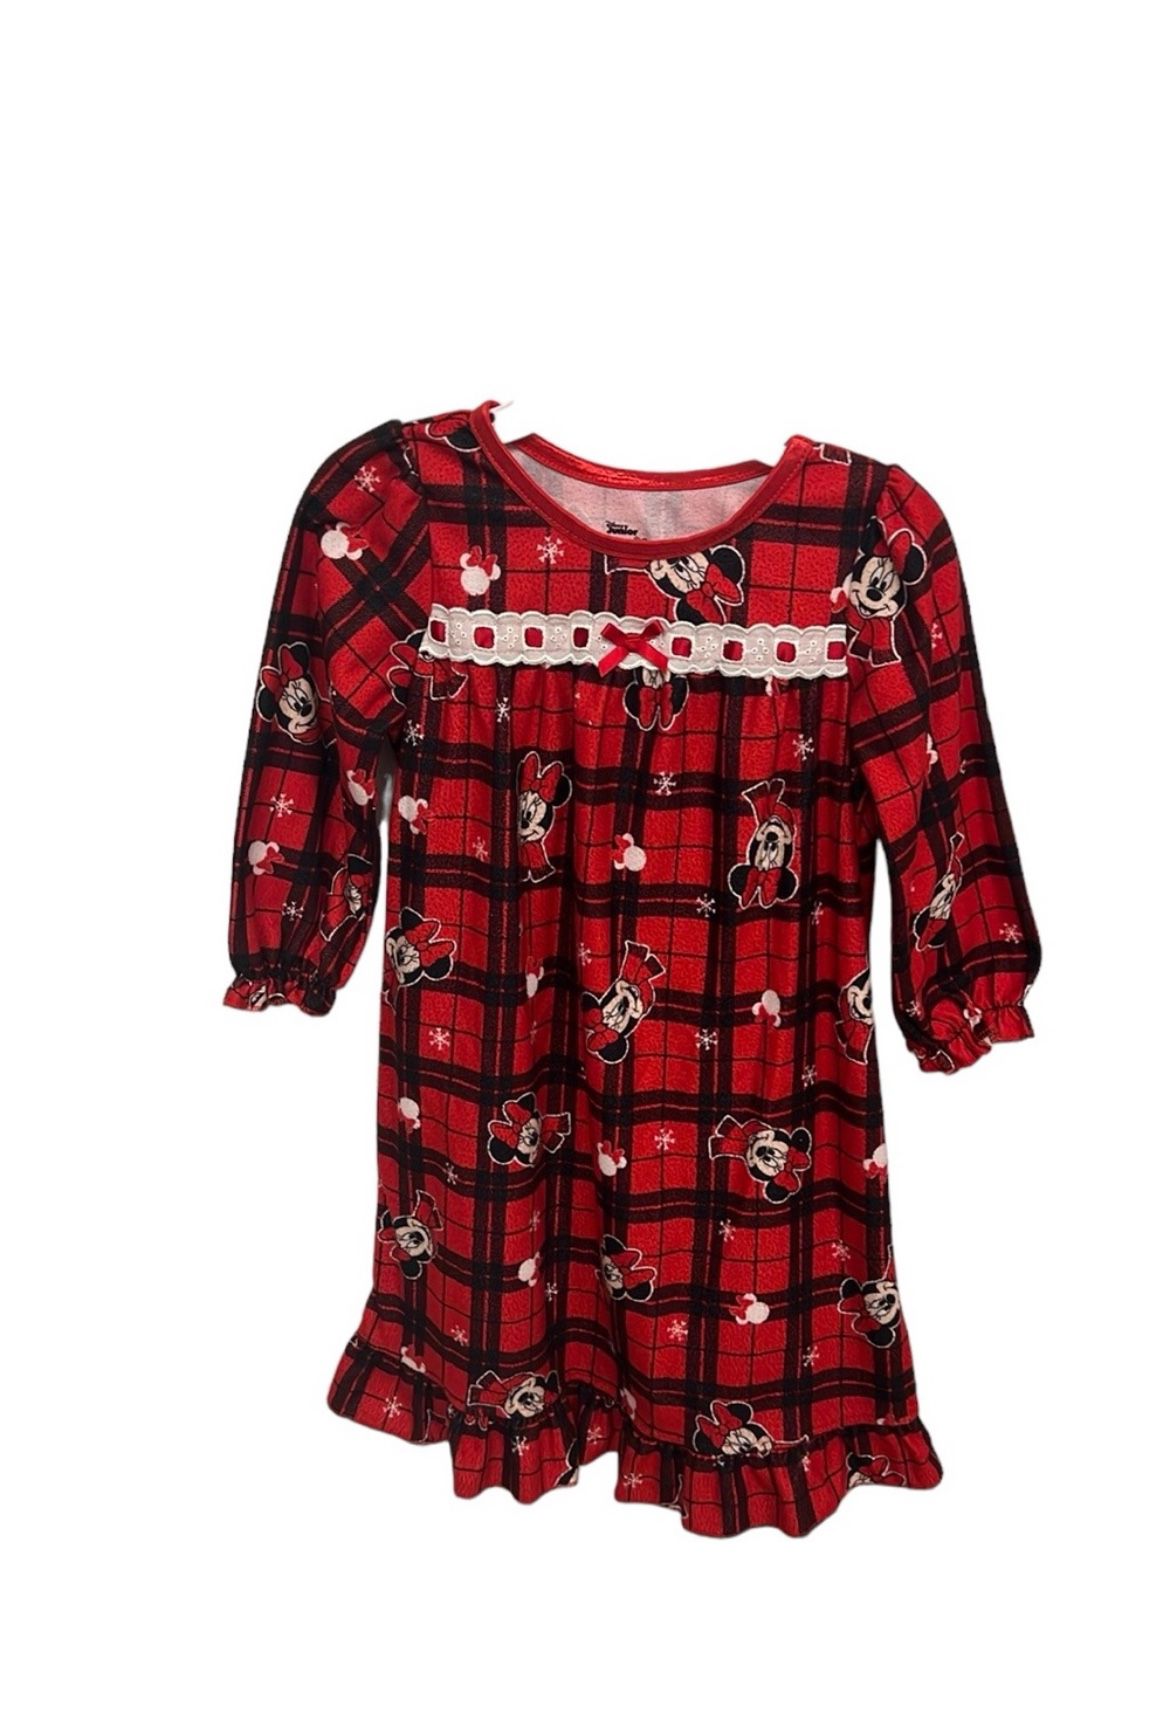 Minnie Mouse Christmas Holiday Toddler Girl Long Sleeve Nightgown Pajamas